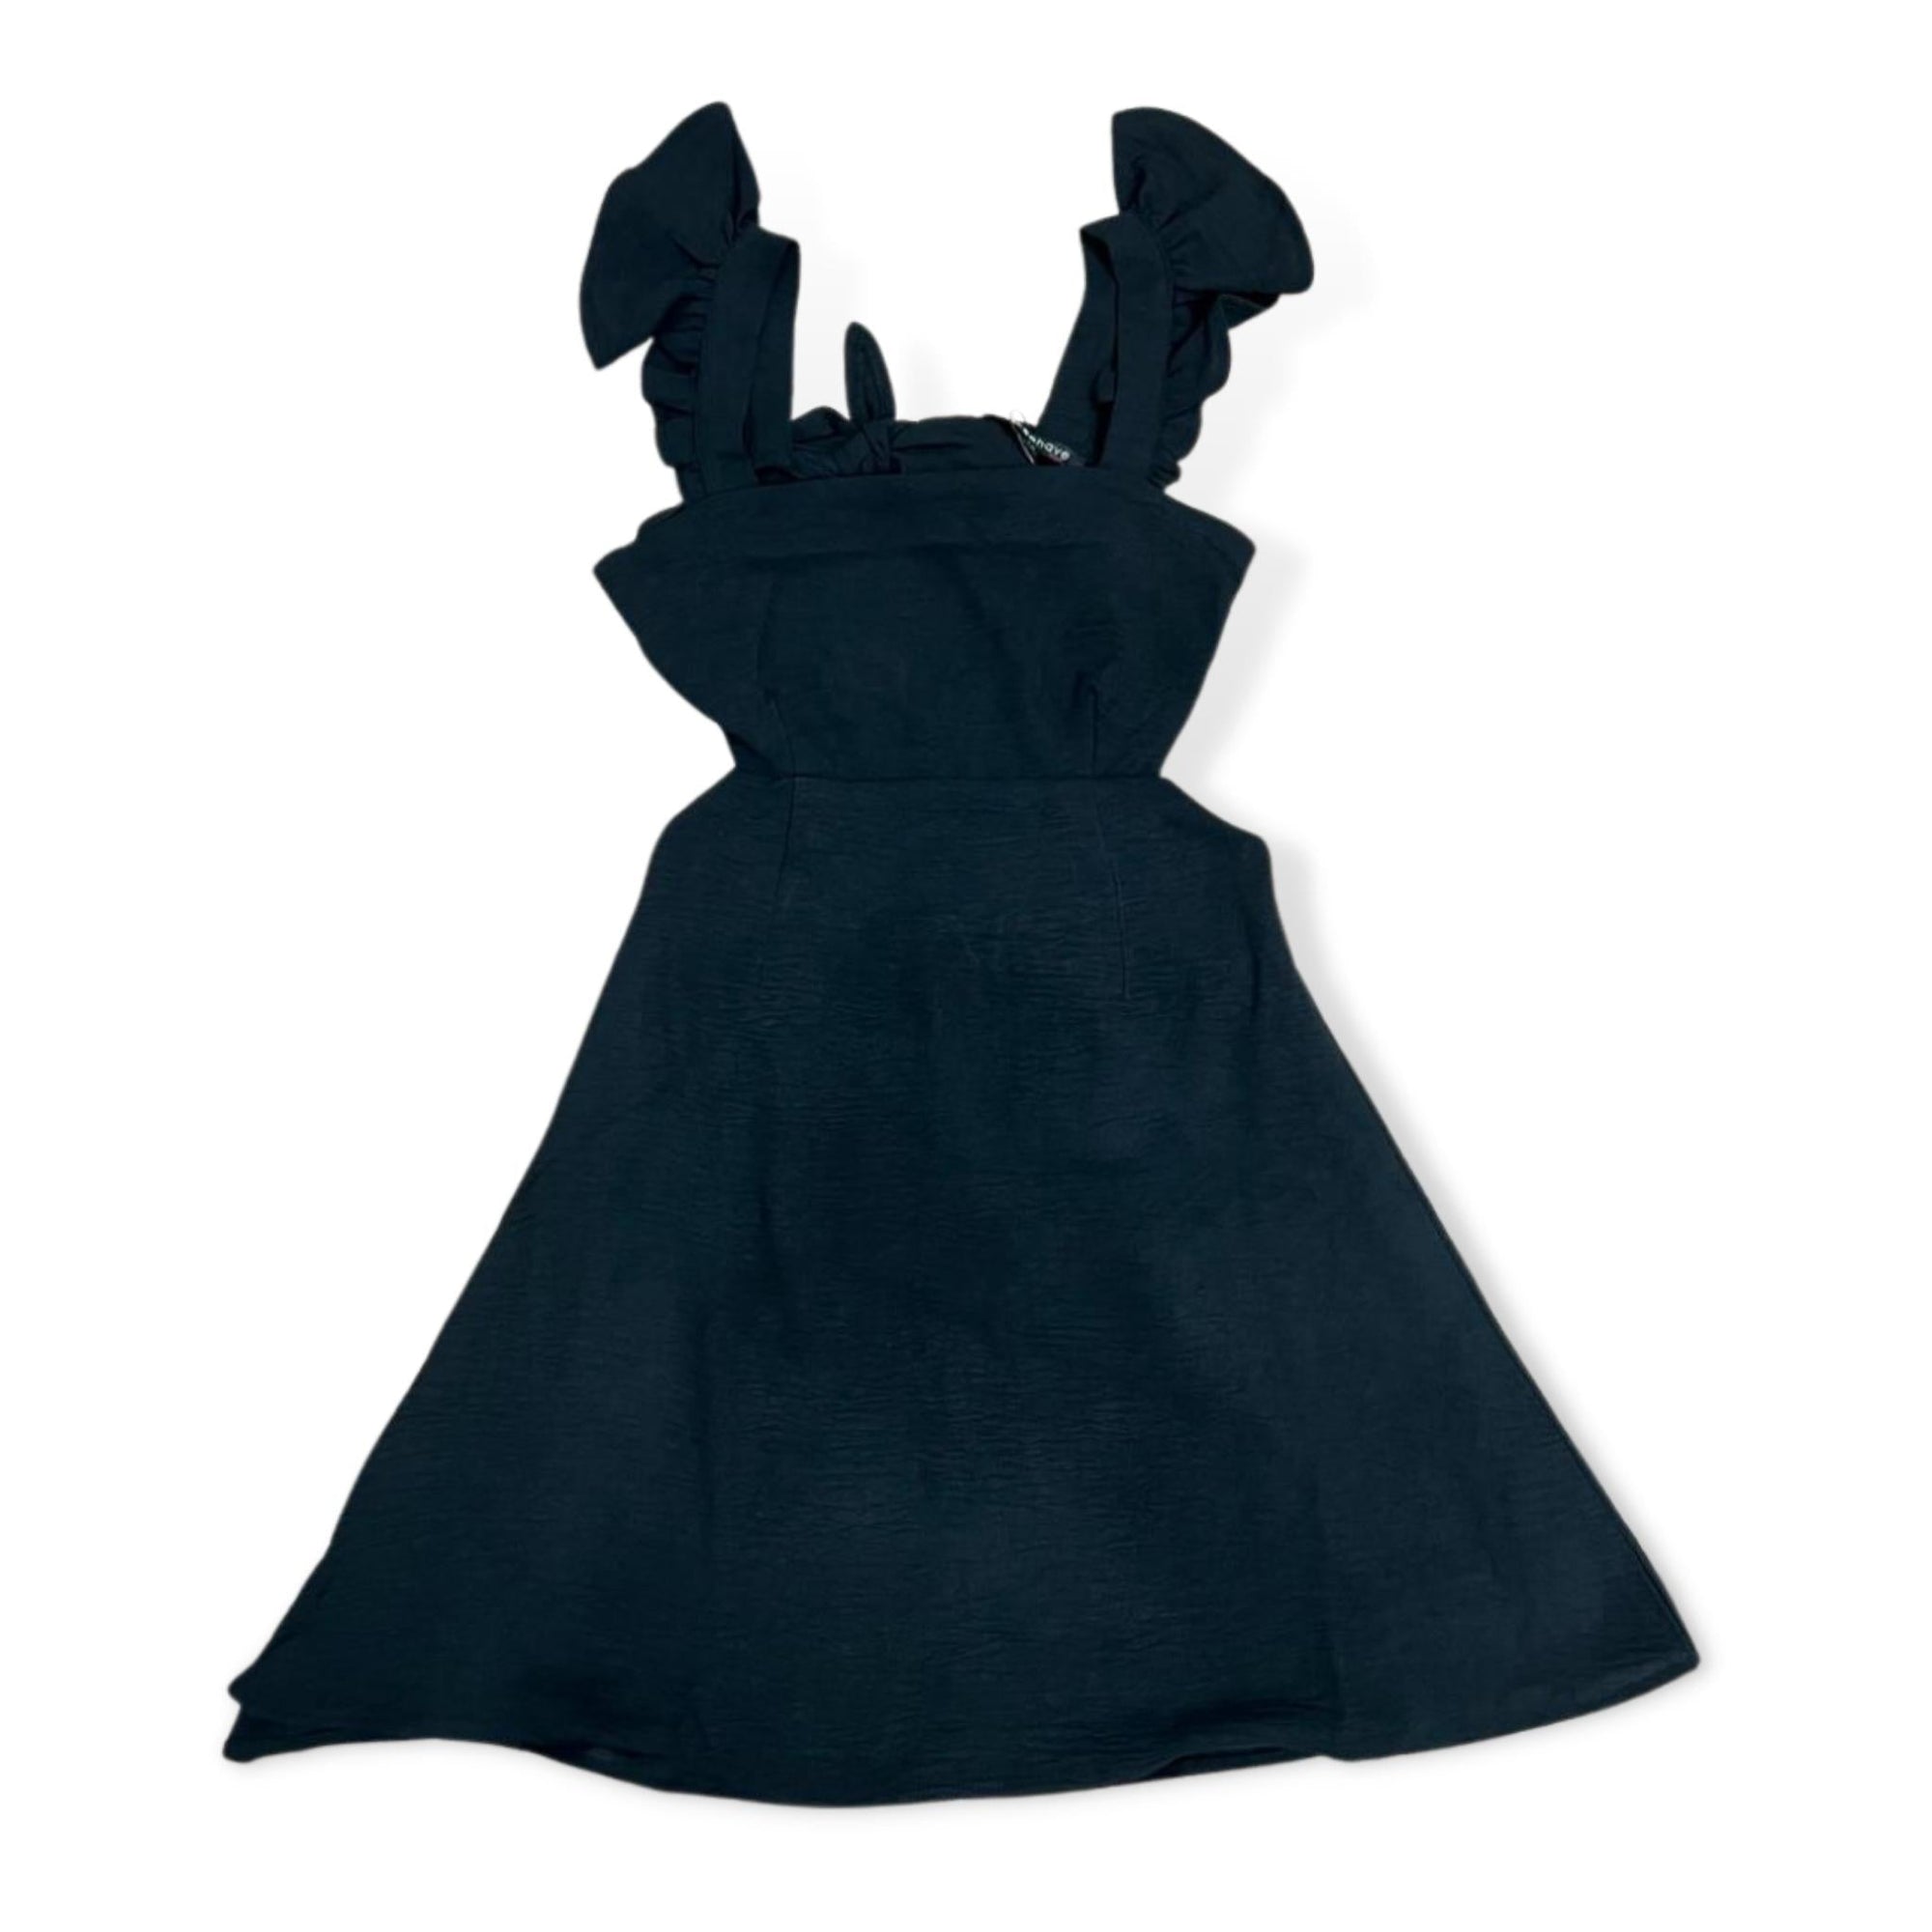 Miss Behave Girls Black Ruby Tie Back Ruffle Dress - a Spirit Animal - Dress $60-$90 10 12